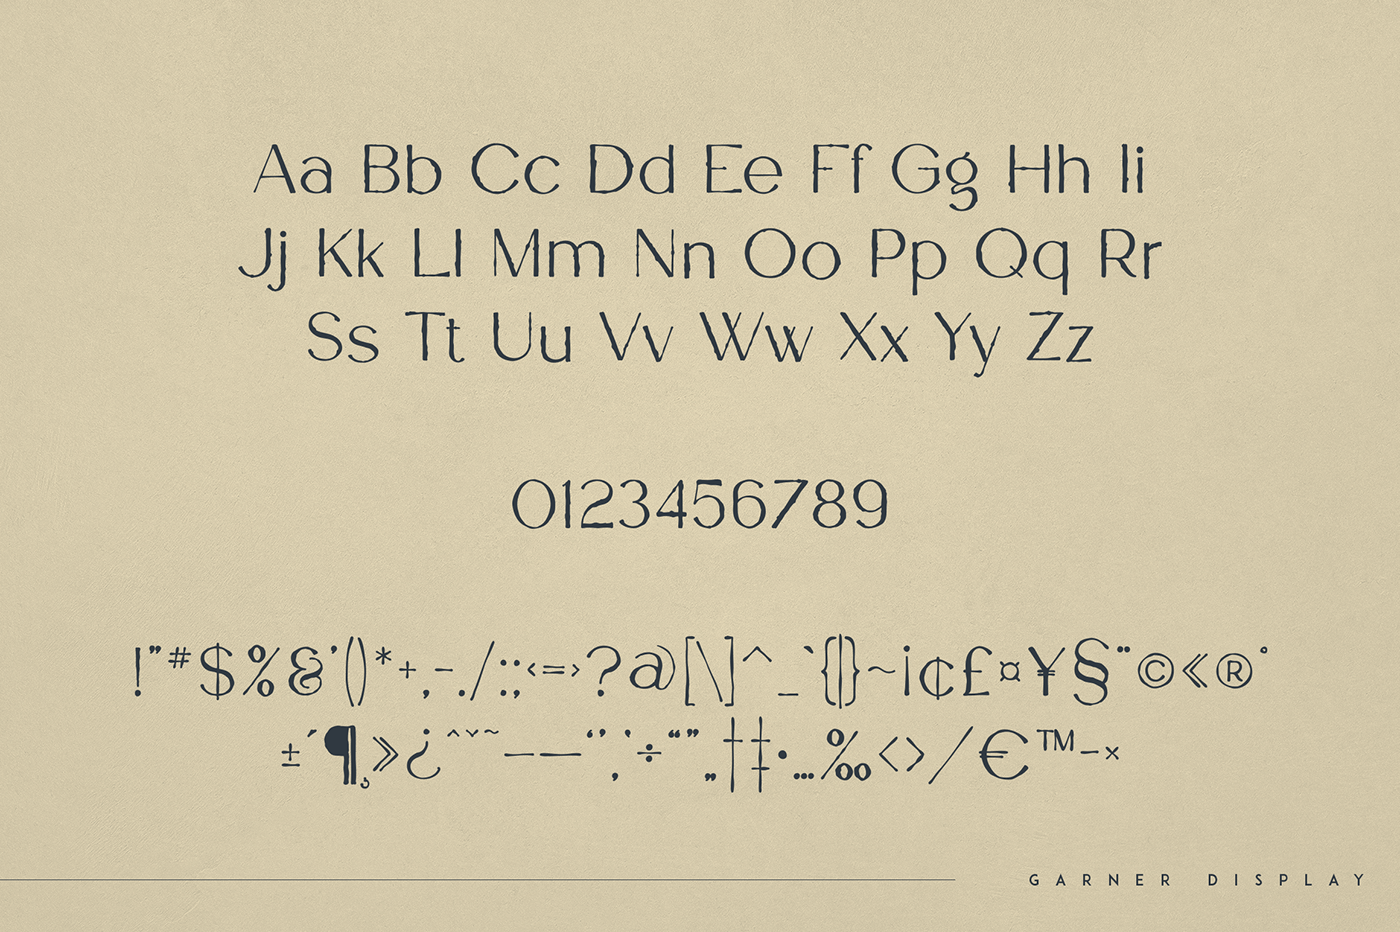 bold Display font handwriting light regular rust Typeface typography   vintage